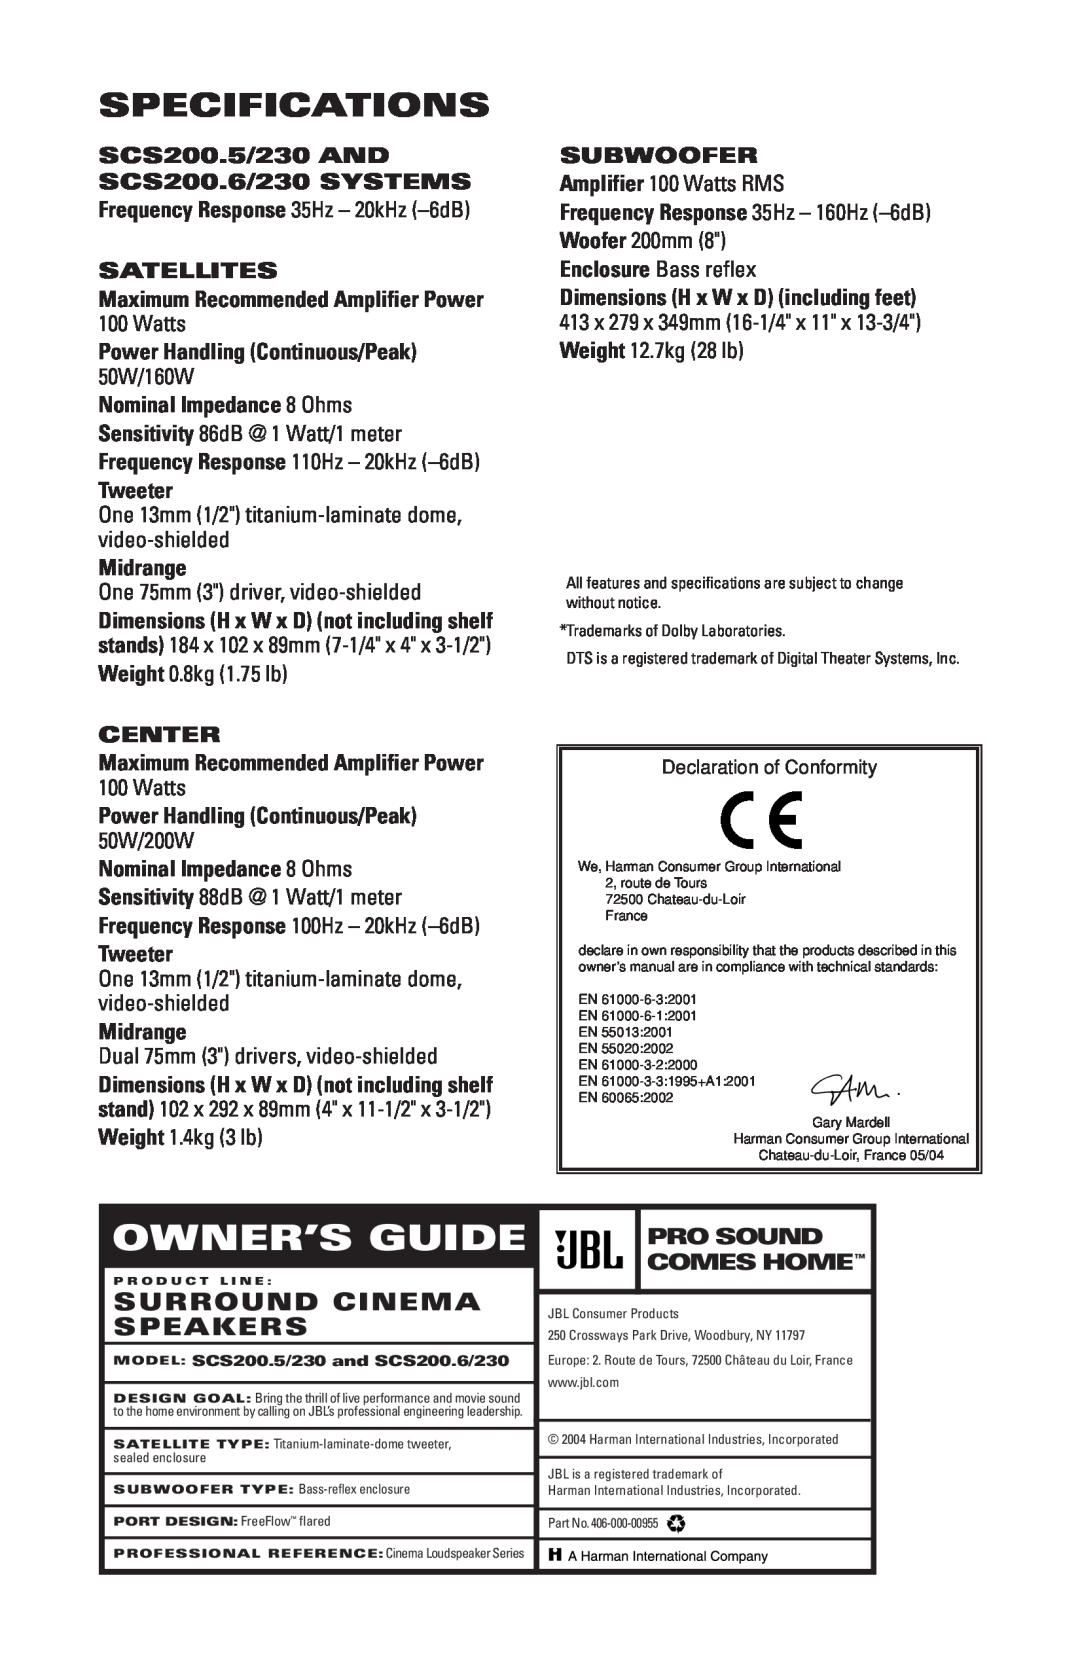 JBL SCS200.5/230, SCS200.6/230 manual Specifications, Surround Cinema Speakers, Owner’S Guide 